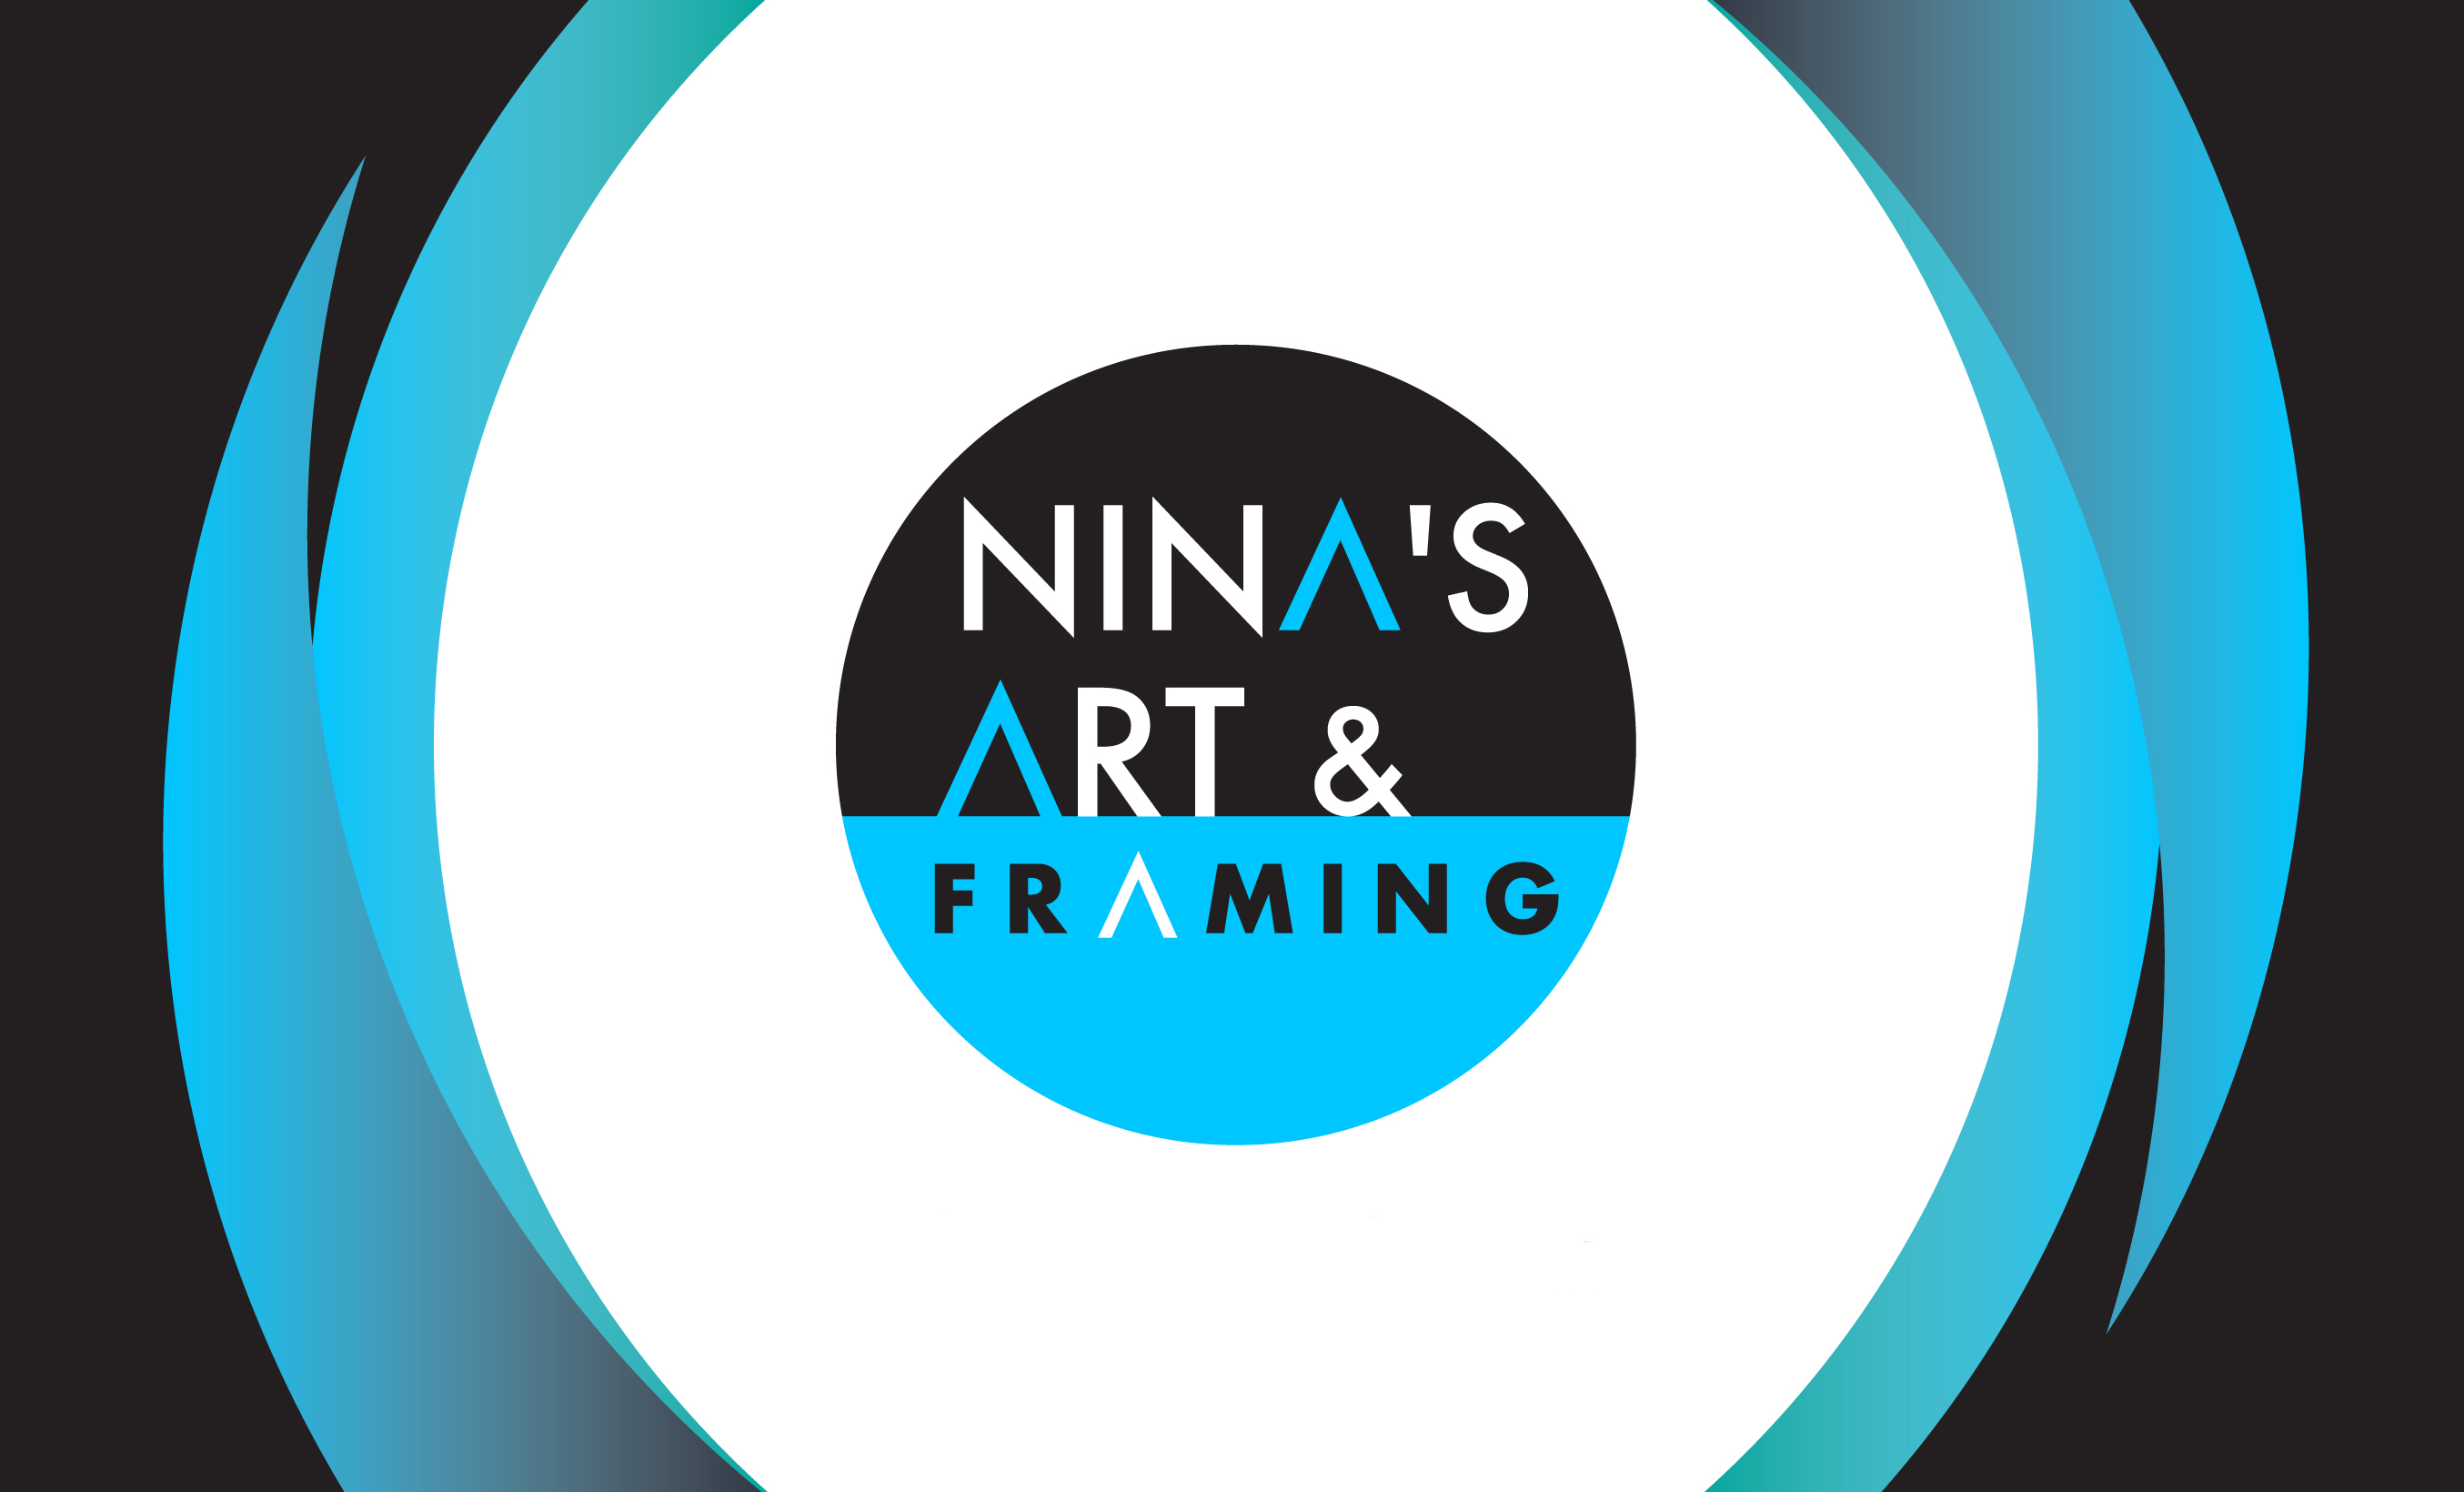 NINA'S ART